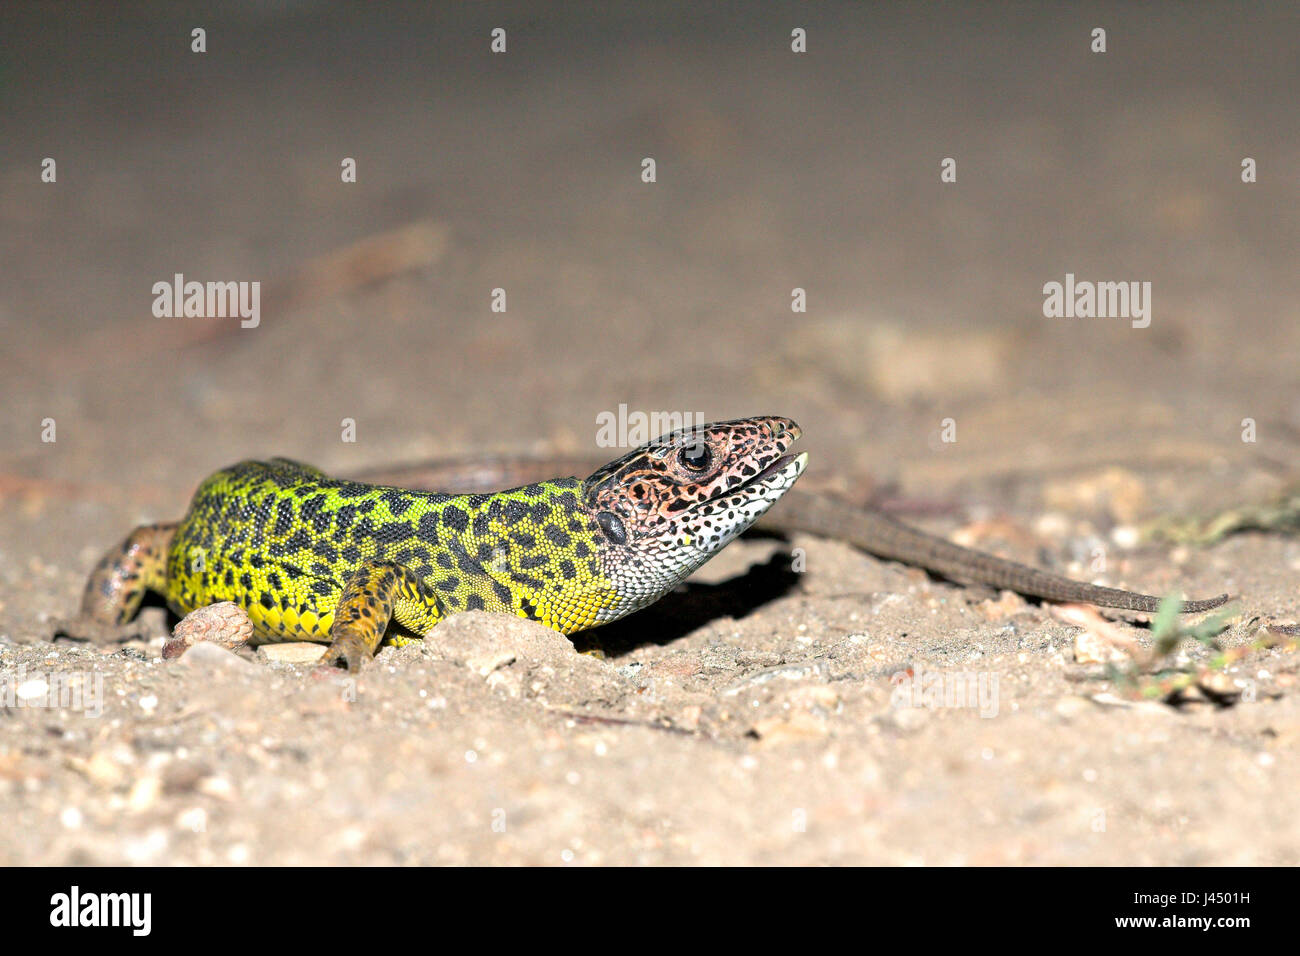 photo of a Schreiber's green lizard on sand Stock Photo